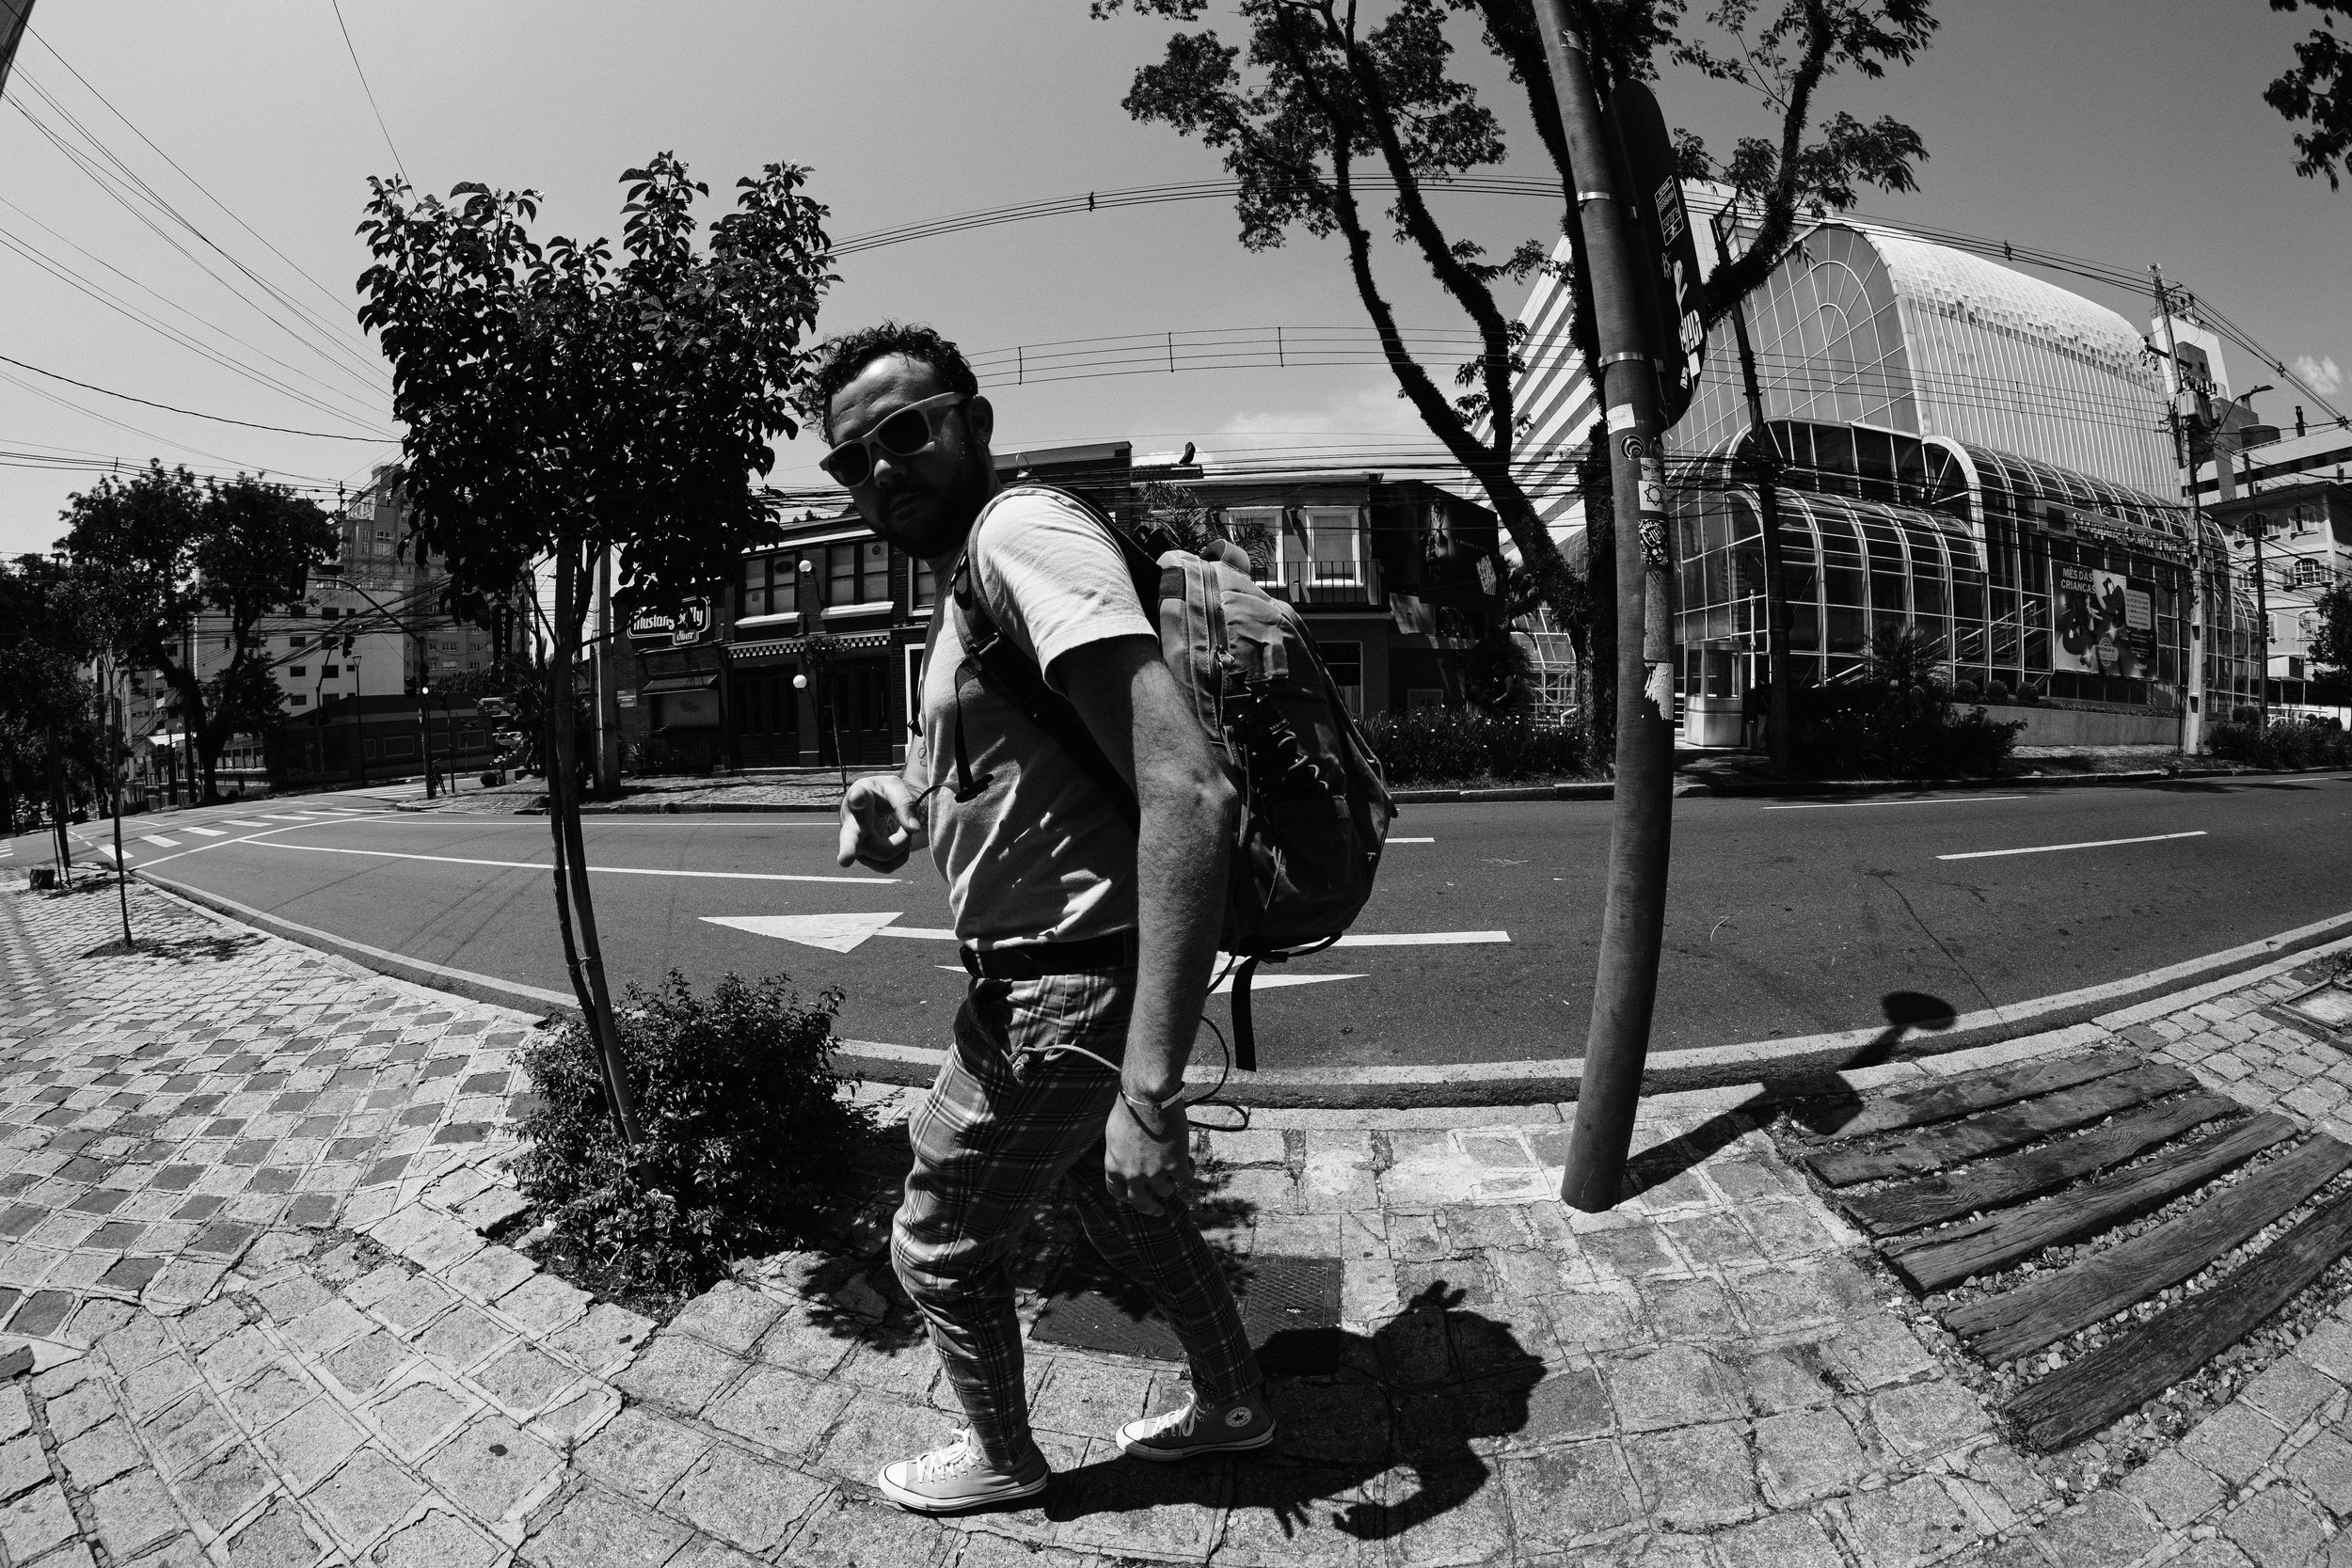 street-photography-with-fish-eye-lens-7-5mm-7artisans-fujifilm-x-t20-ricardo-franzen-82.jpg